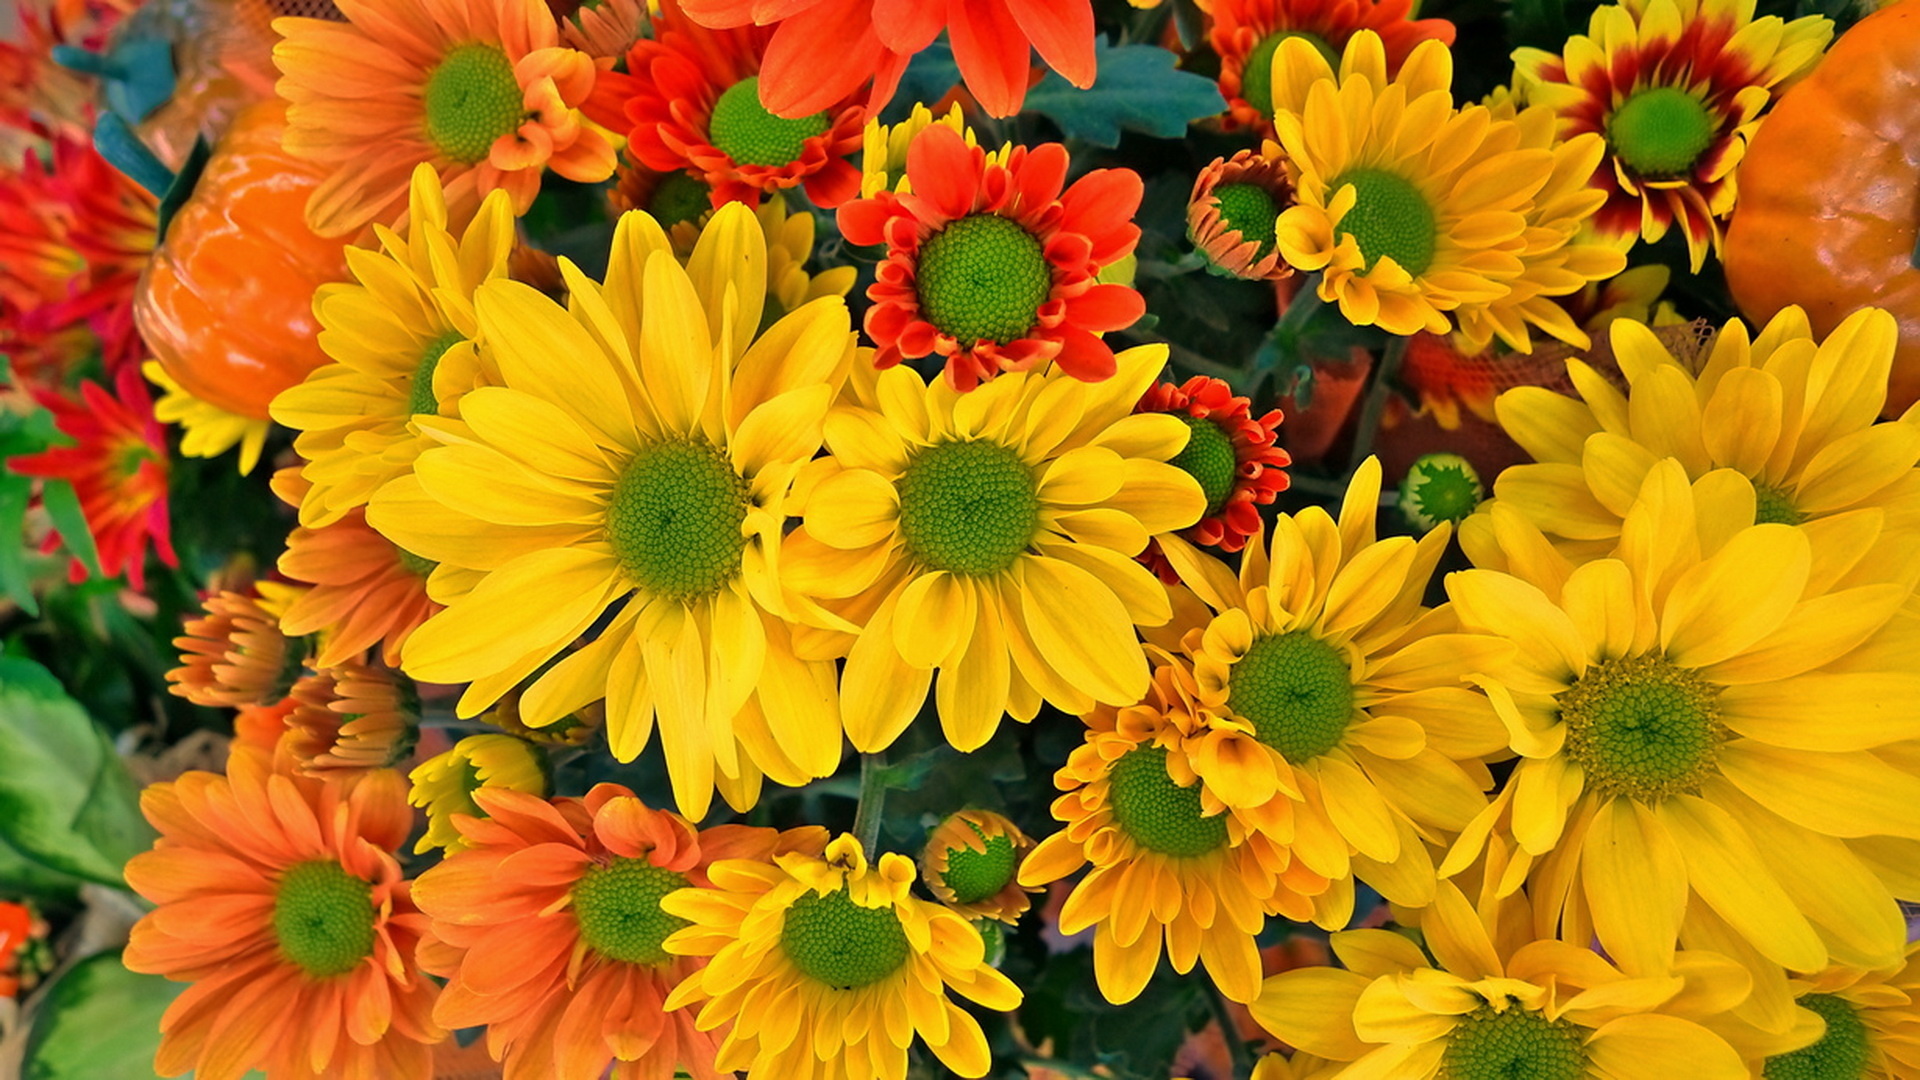 393997 descargar imagen tierra/naturaleza, crisantemo, flor, flor naranja, flor amarilla, flores: fondos de pantalla y protectores de pantalla gratis